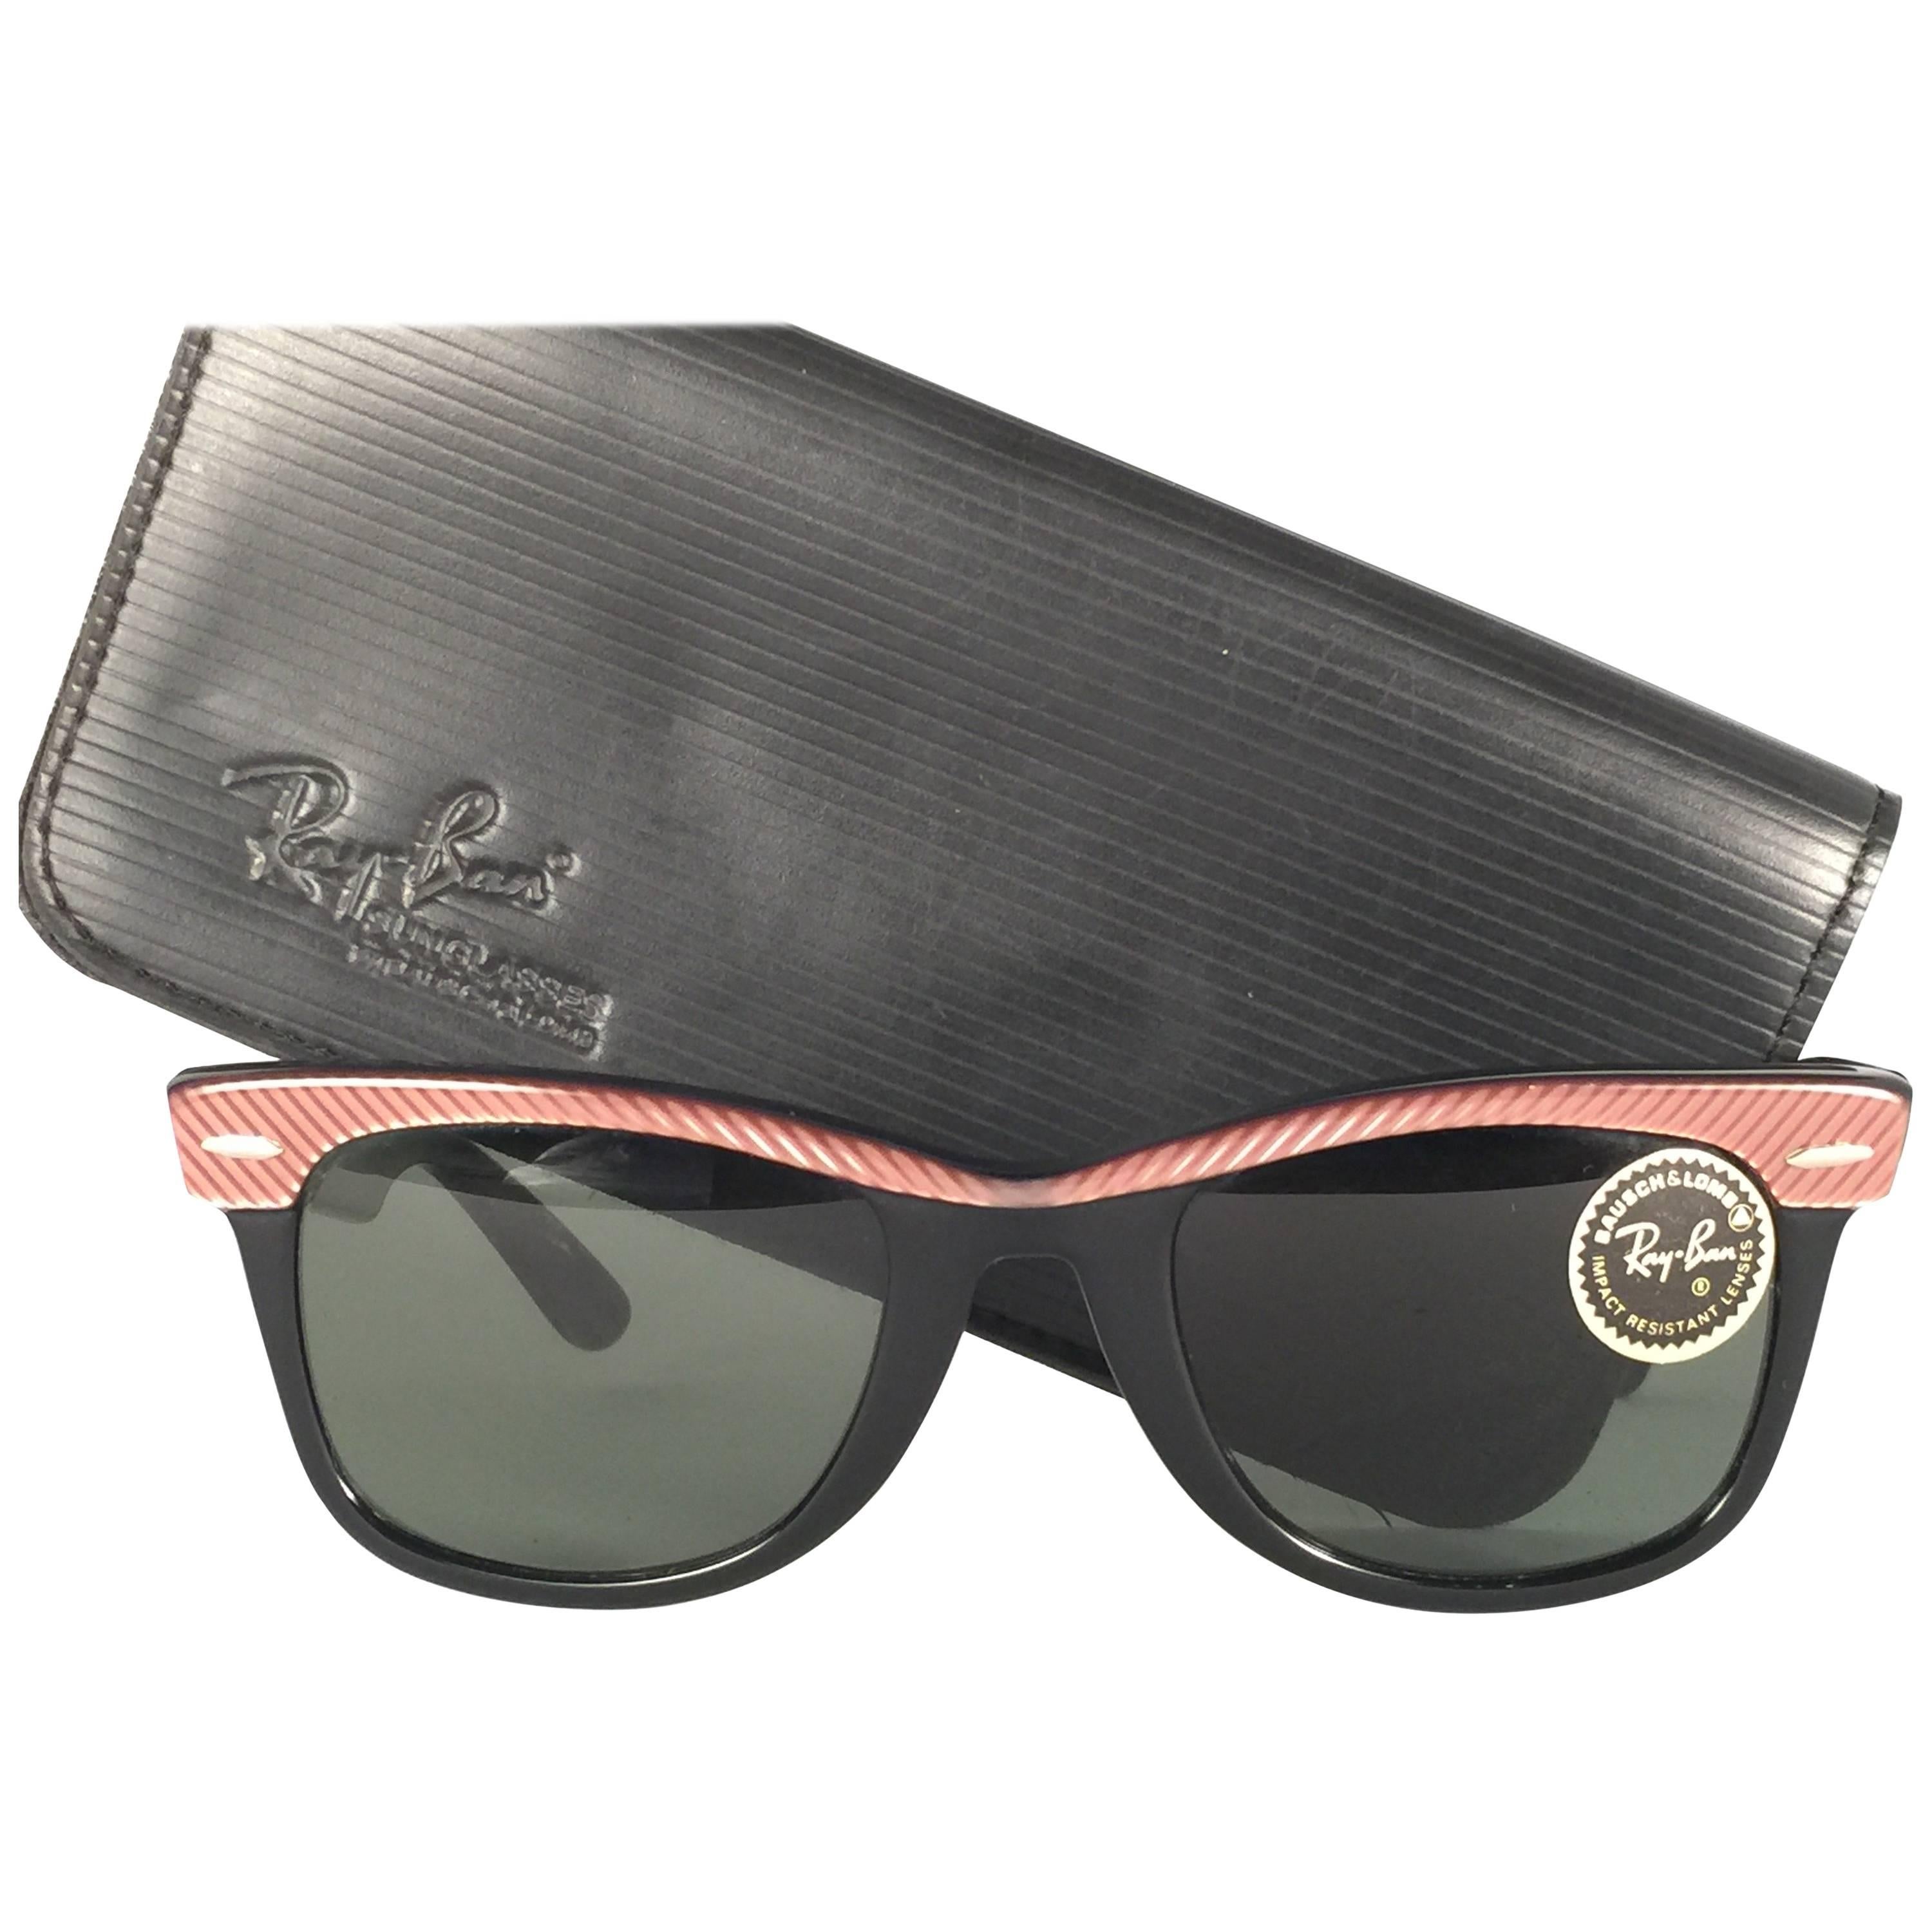 New Ray Ban The Wayfarer Rose / Black B&L G15 Grey Lenses USA 80's Sunglasses